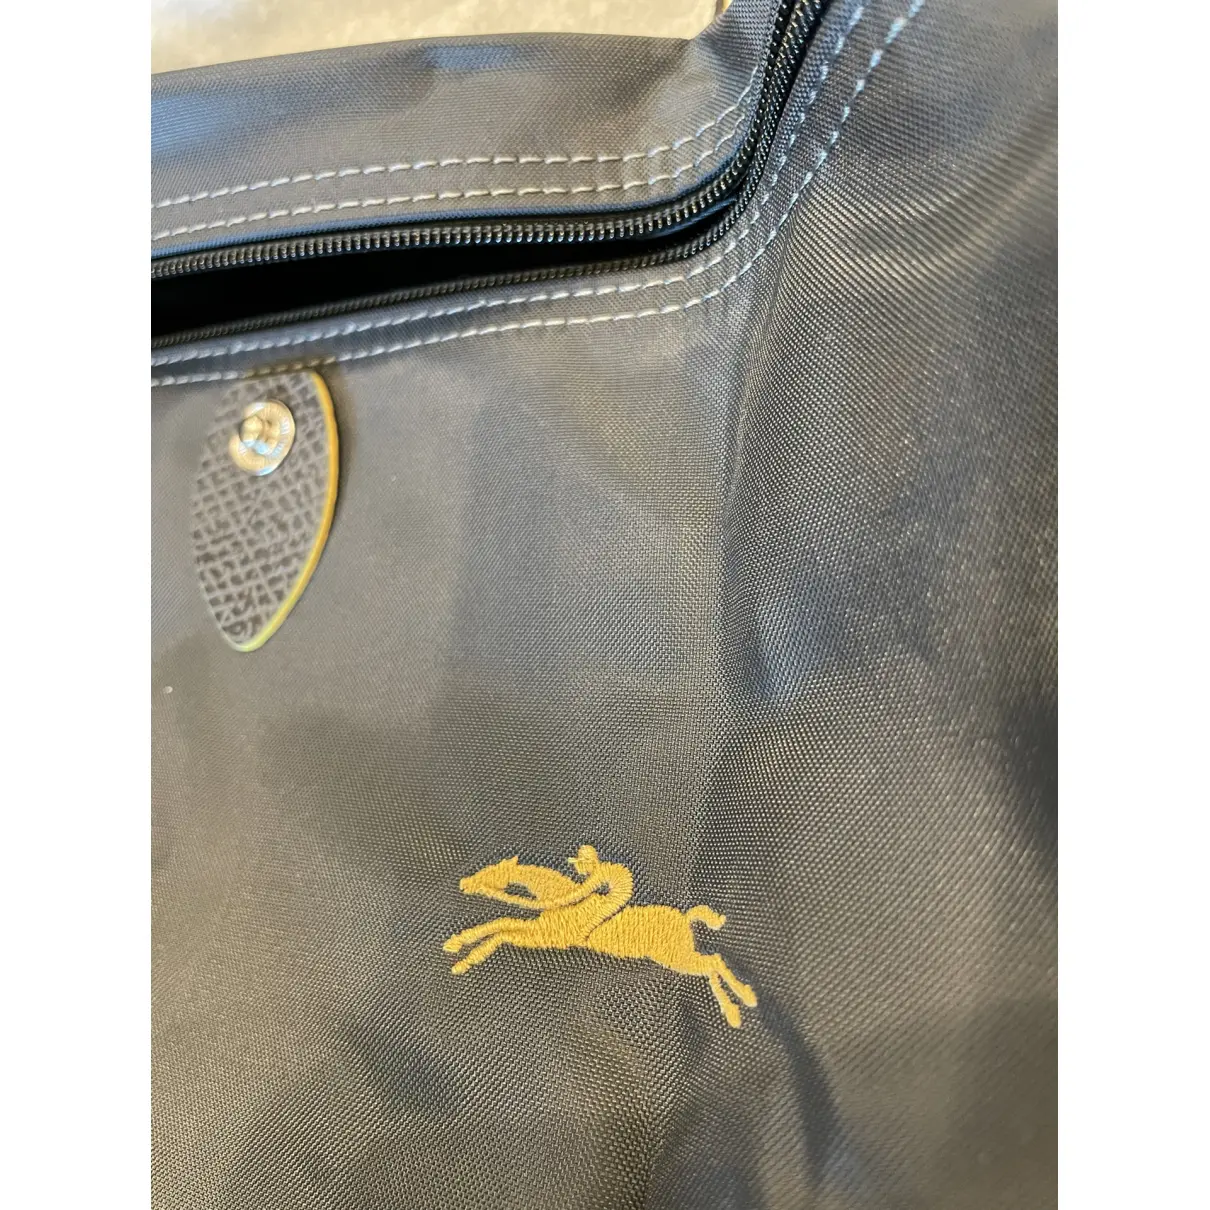 Backpack Longchamp